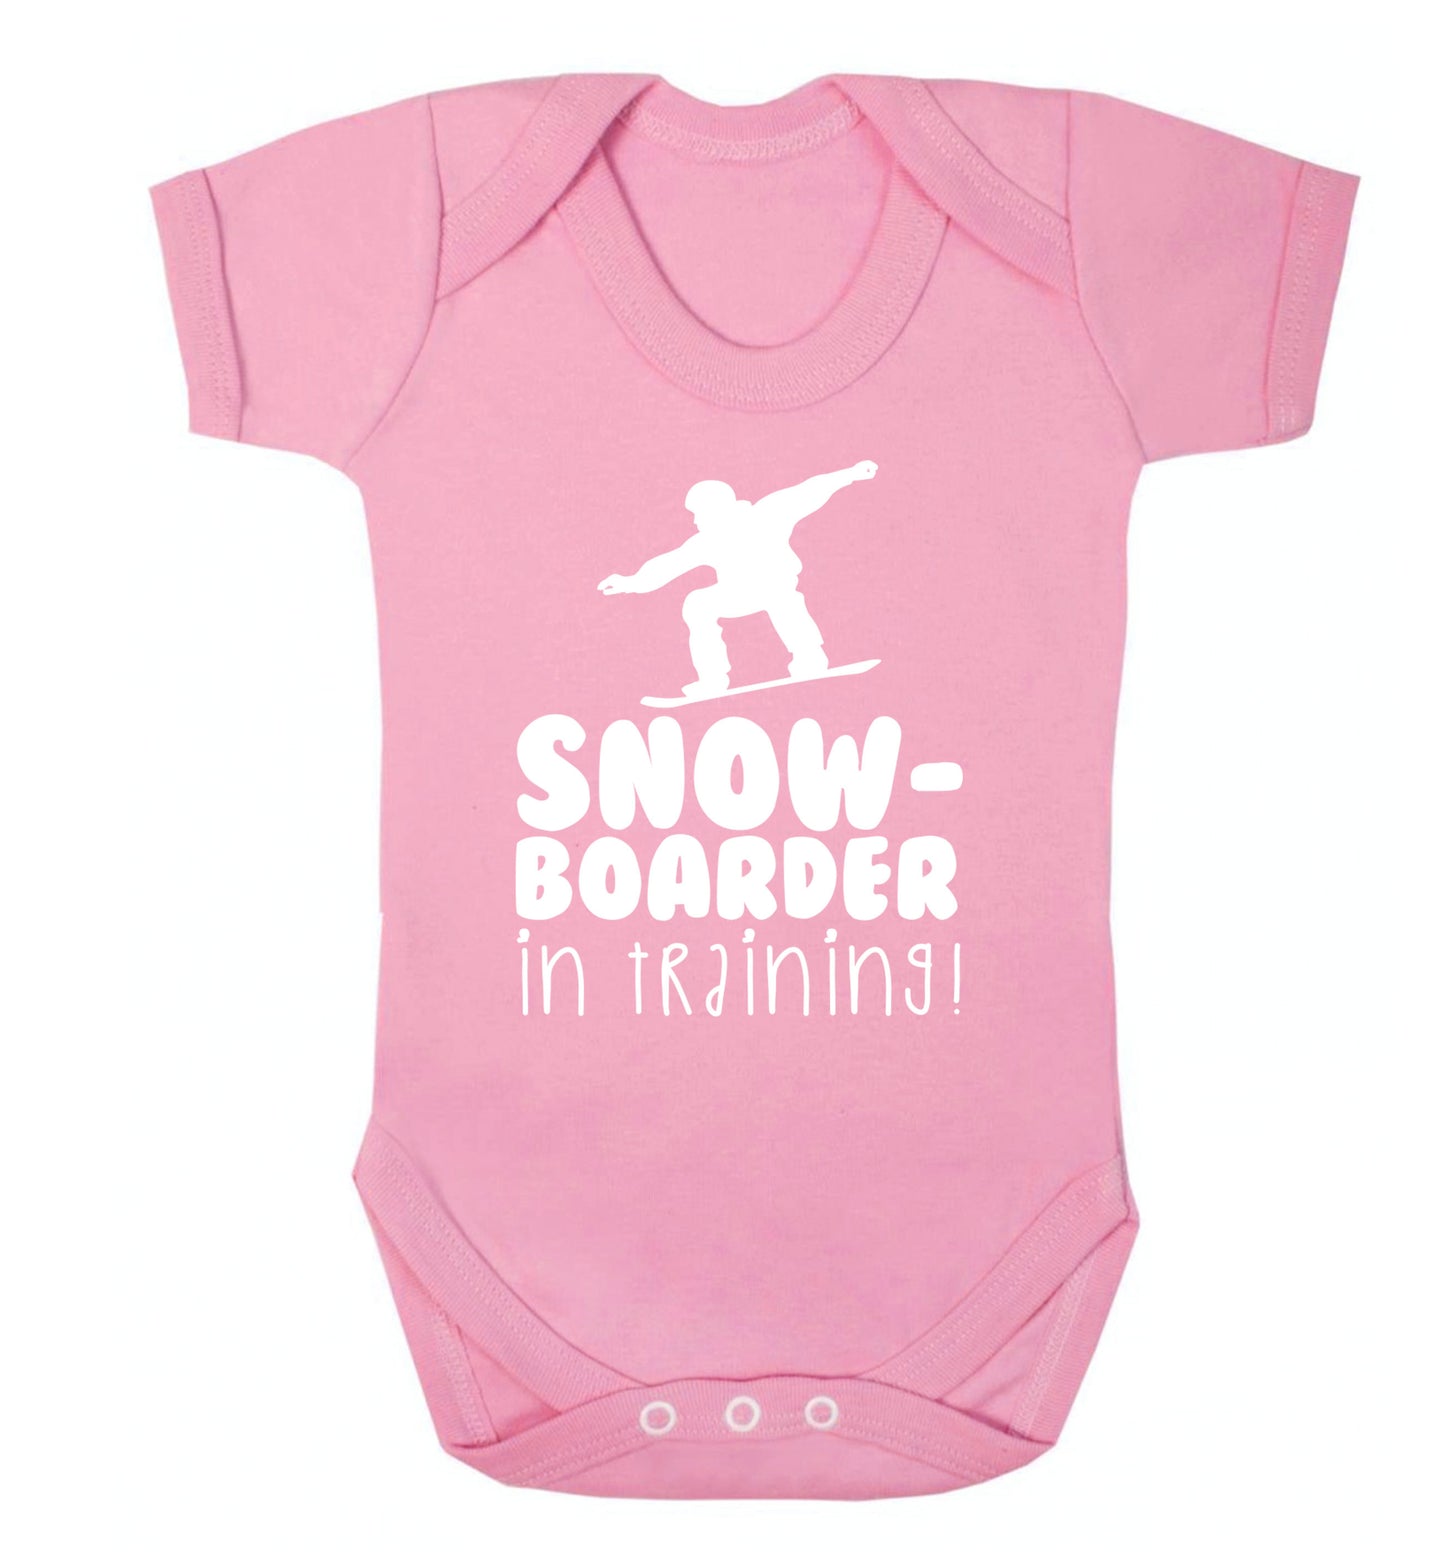 Snowboarder in training Baby Vest pale pink 18-24 months